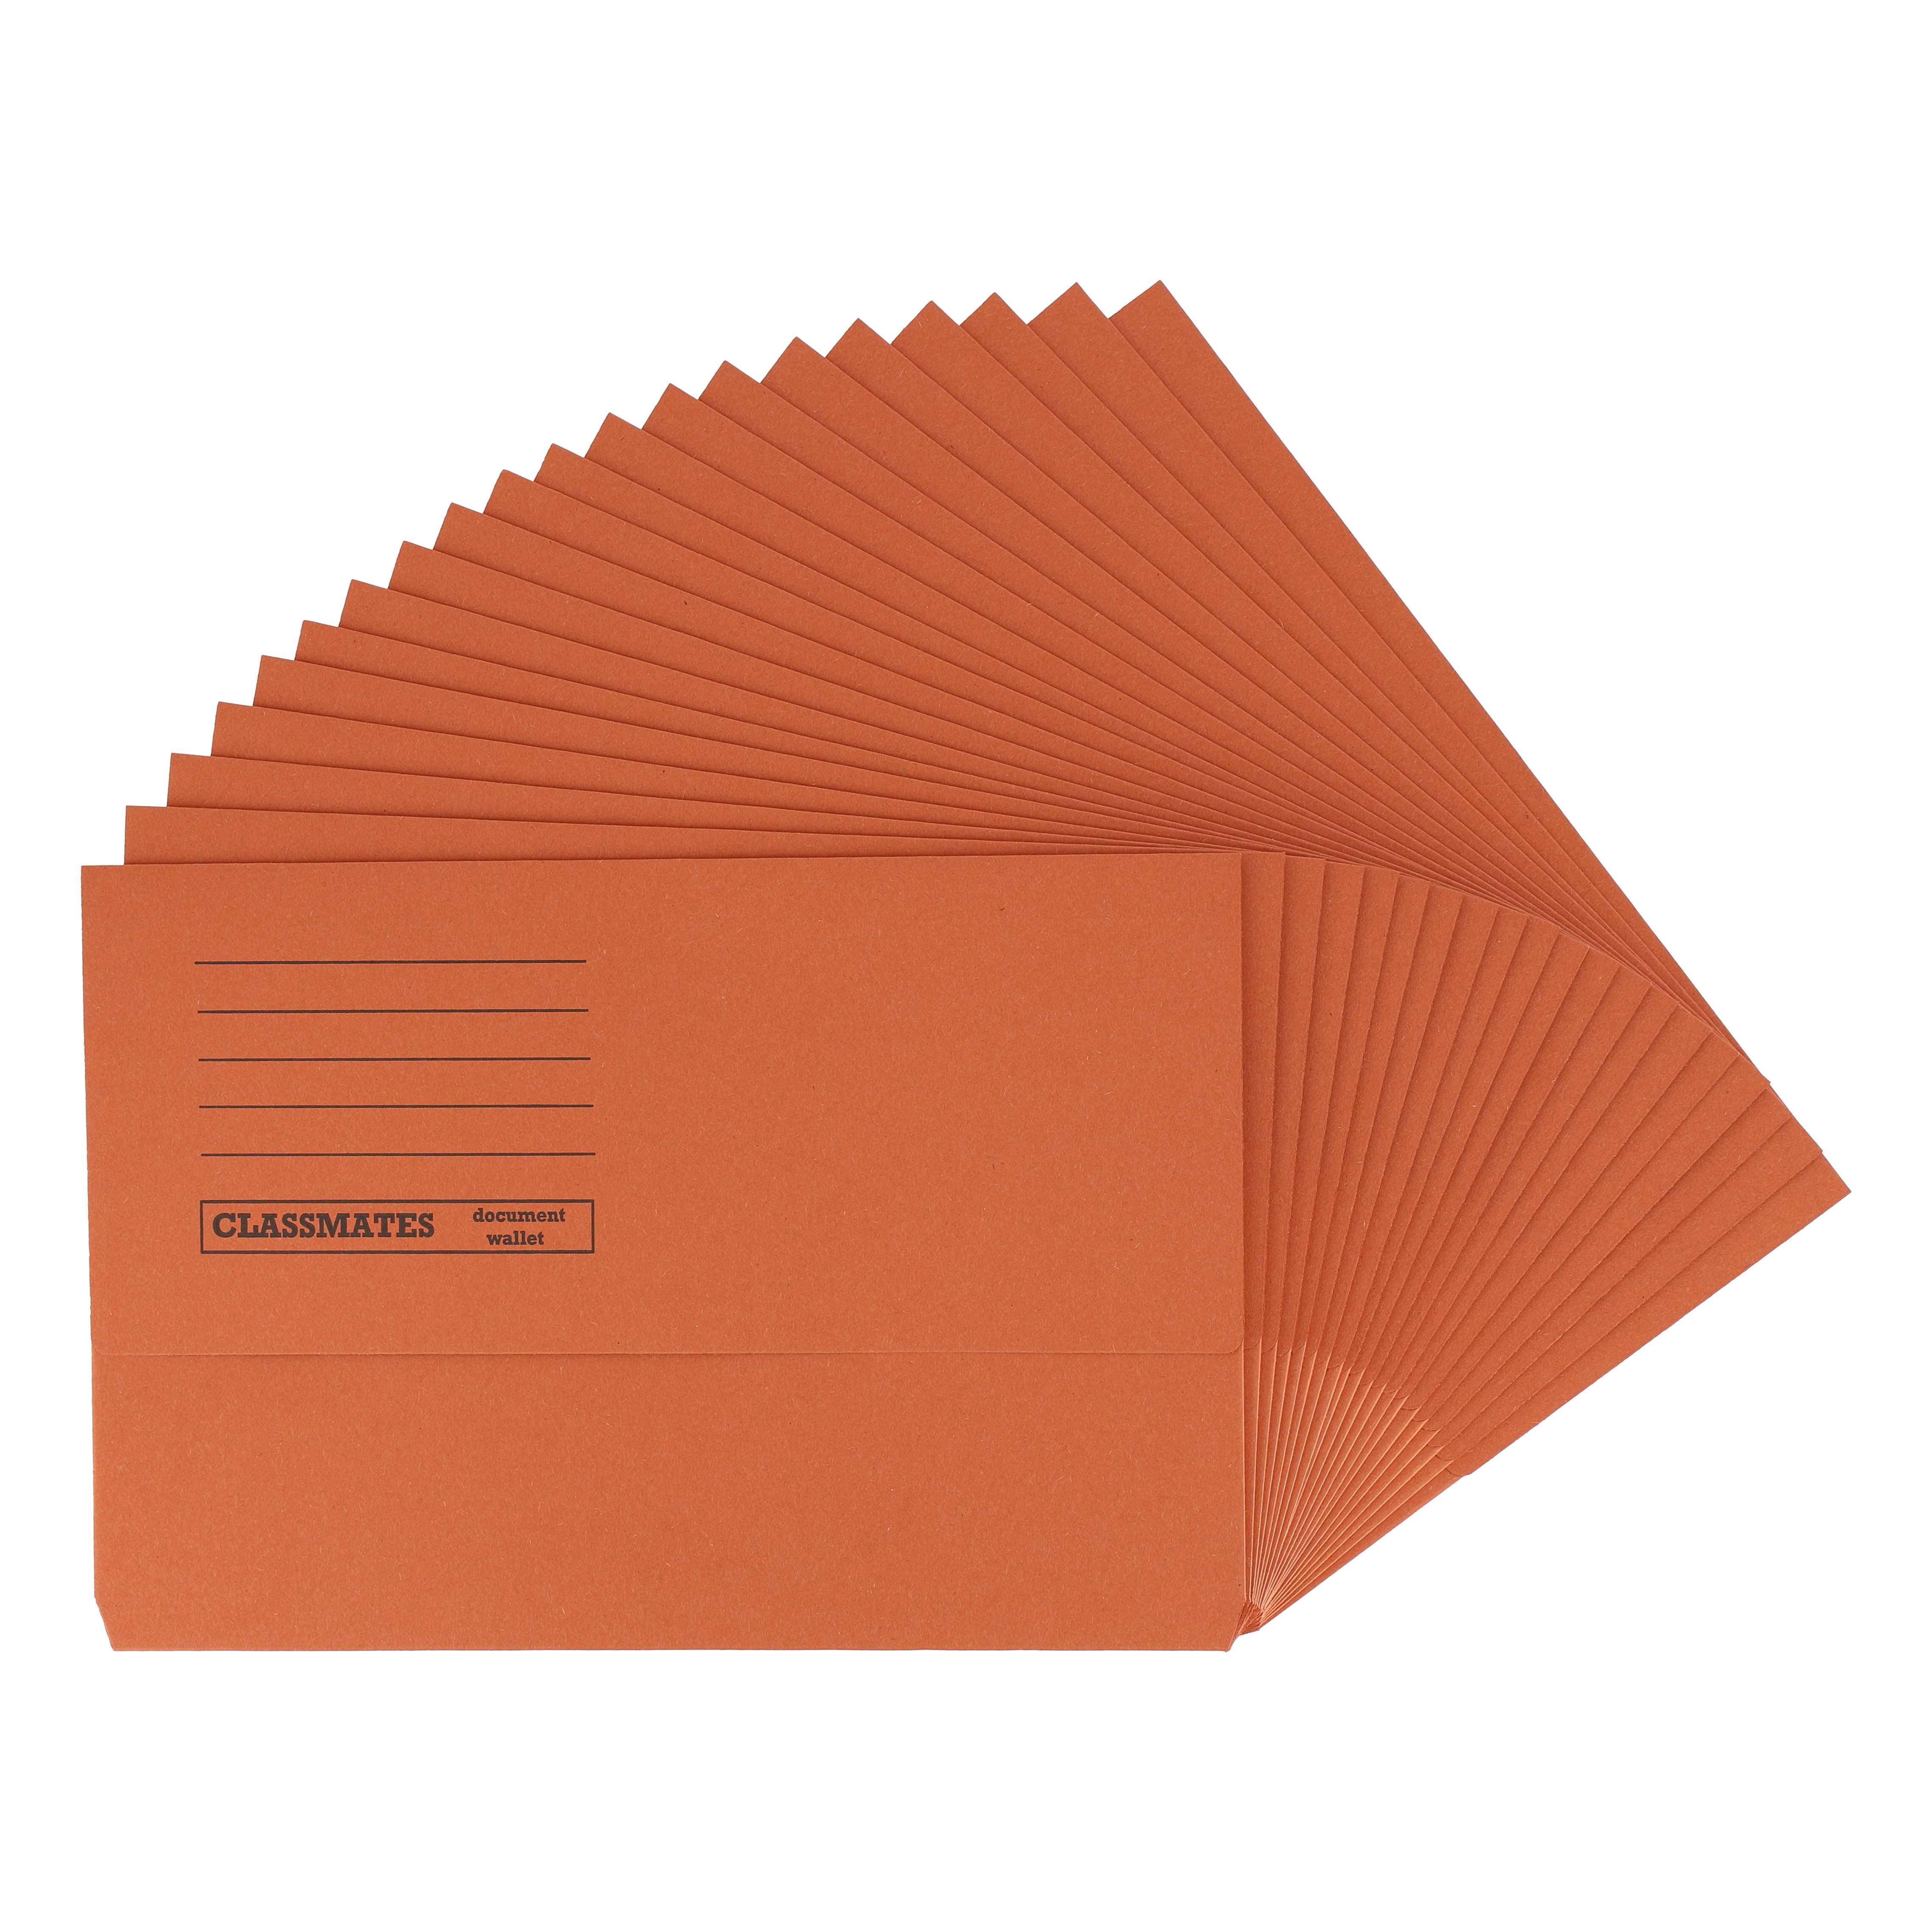 Yellow Foolscap Document Wallet All Qty's Manilla Filling Folders Flap Folding